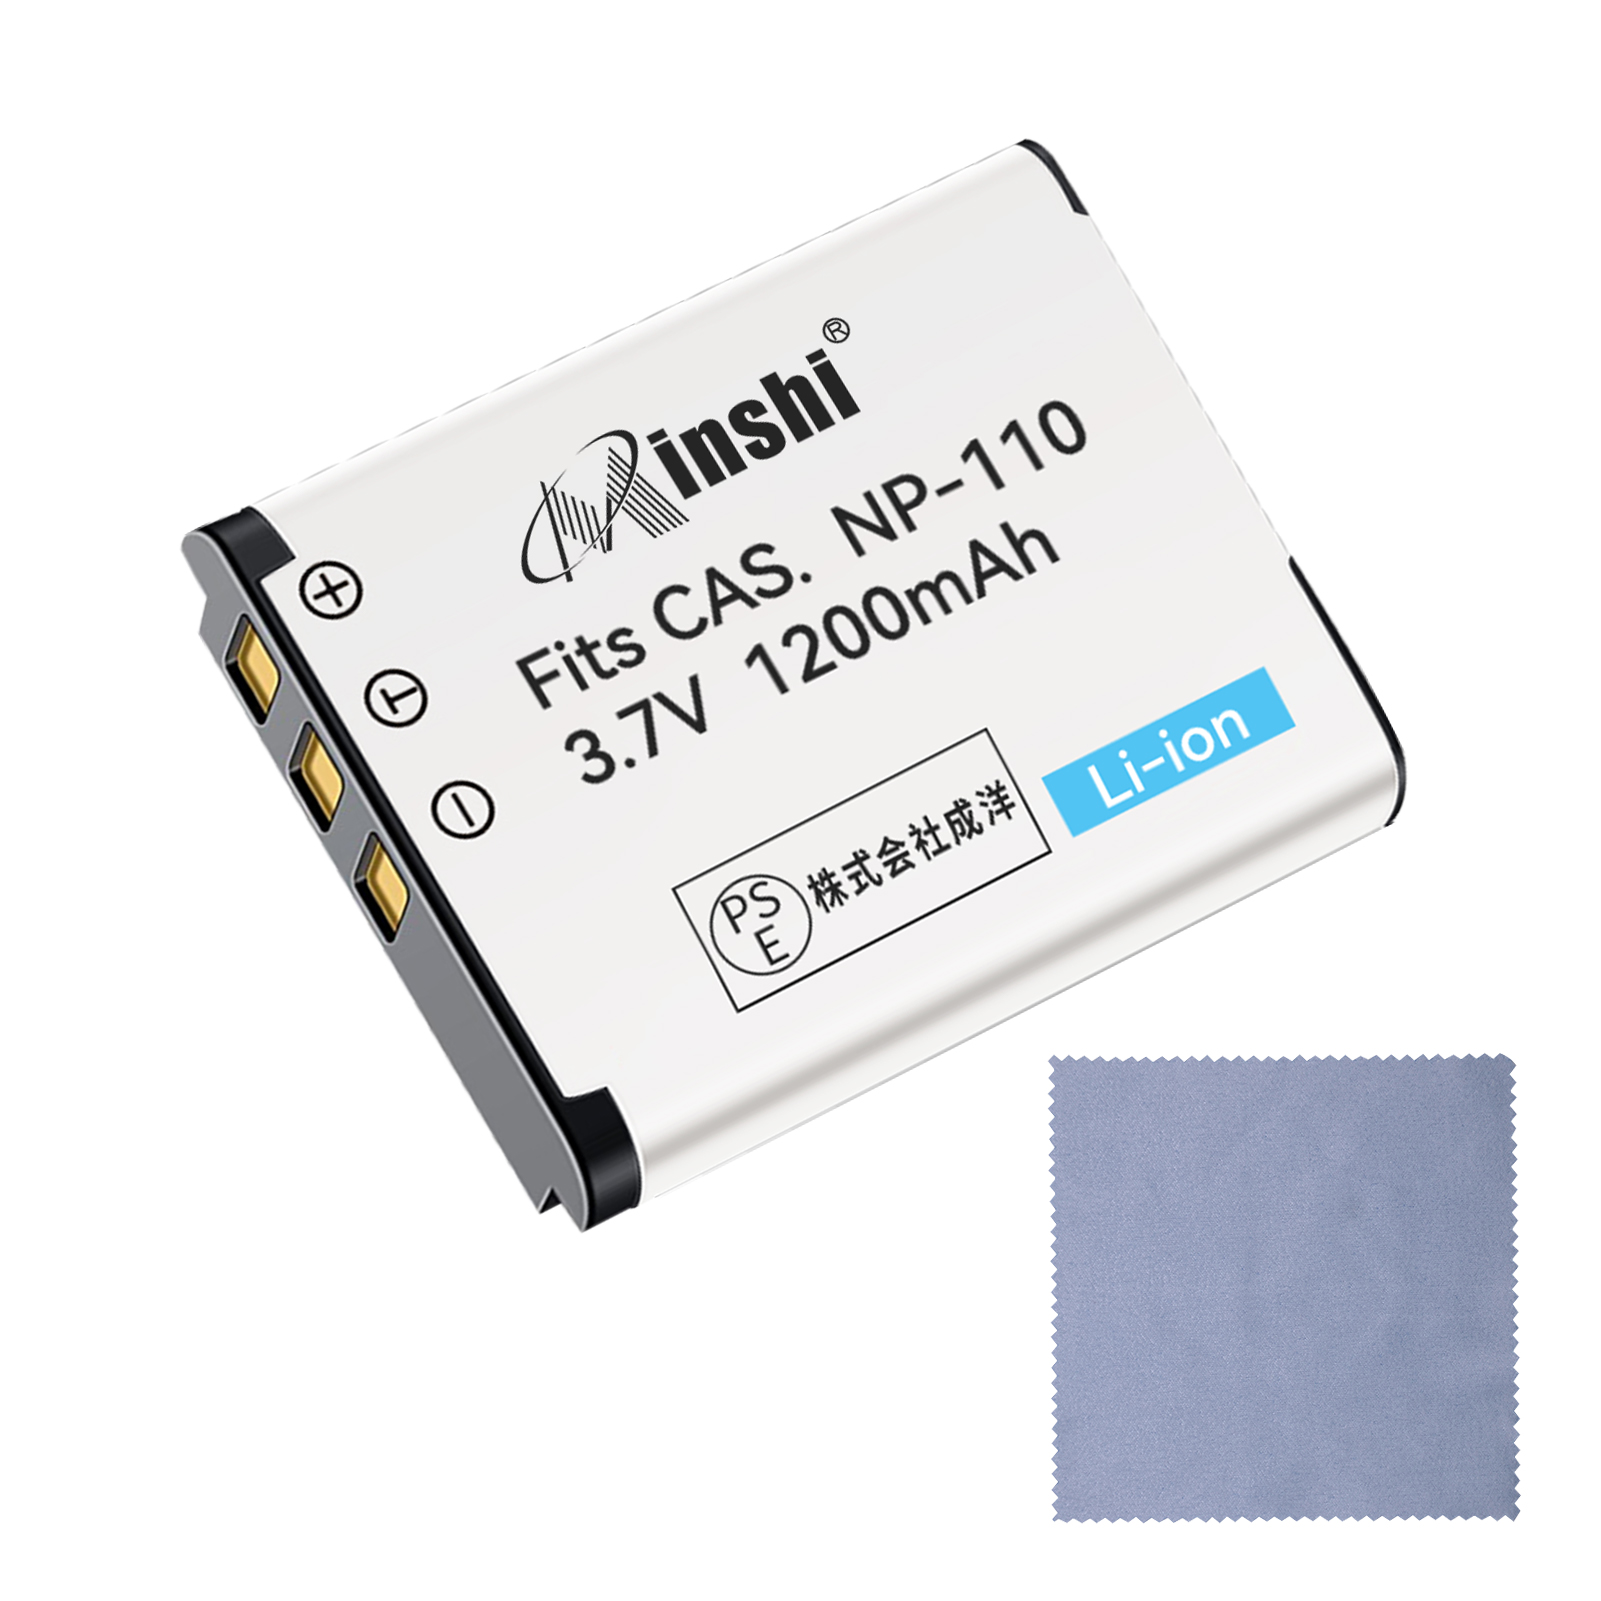 【清潔布ー付】minshi CASIO BN-VG212U NP-110 【1200mAh 3.7V】PSE認定済 高品質BN-VG212U NP-160交換用バッテリー